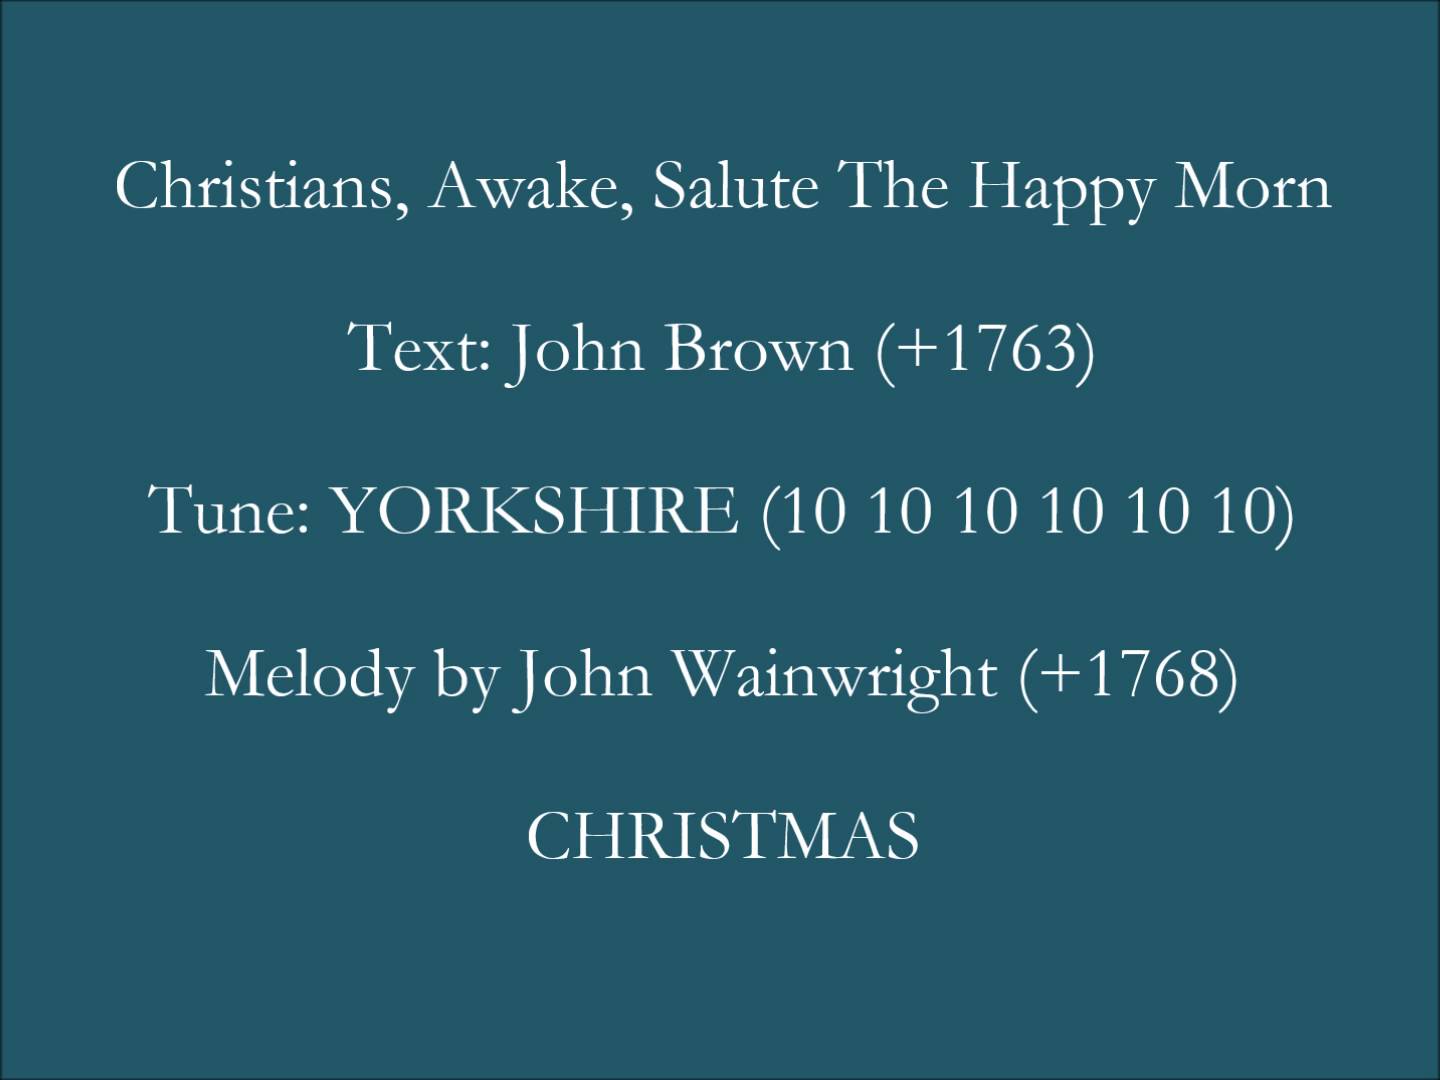 Song lyrics to Christians, Awake, Salute the Happy Morn, a traditional Christmas carol, written by: John Byron, music by: J. Wainwright